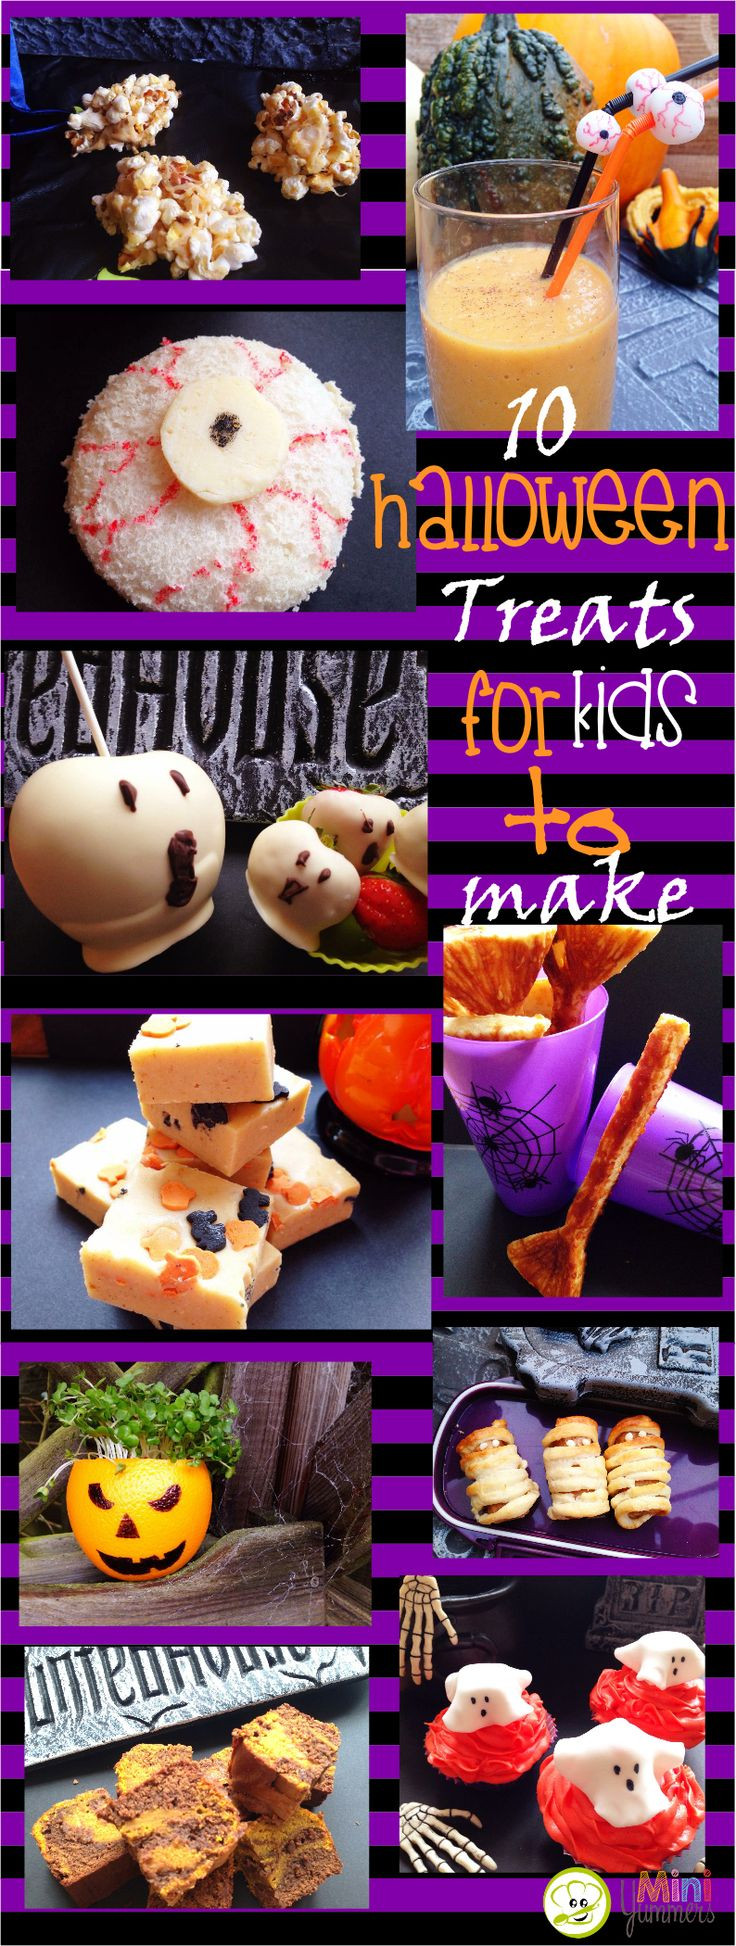 Cheap Halloween Party Ideas For Kids
 17 Best images about Cheap Halloween Party Ideas on